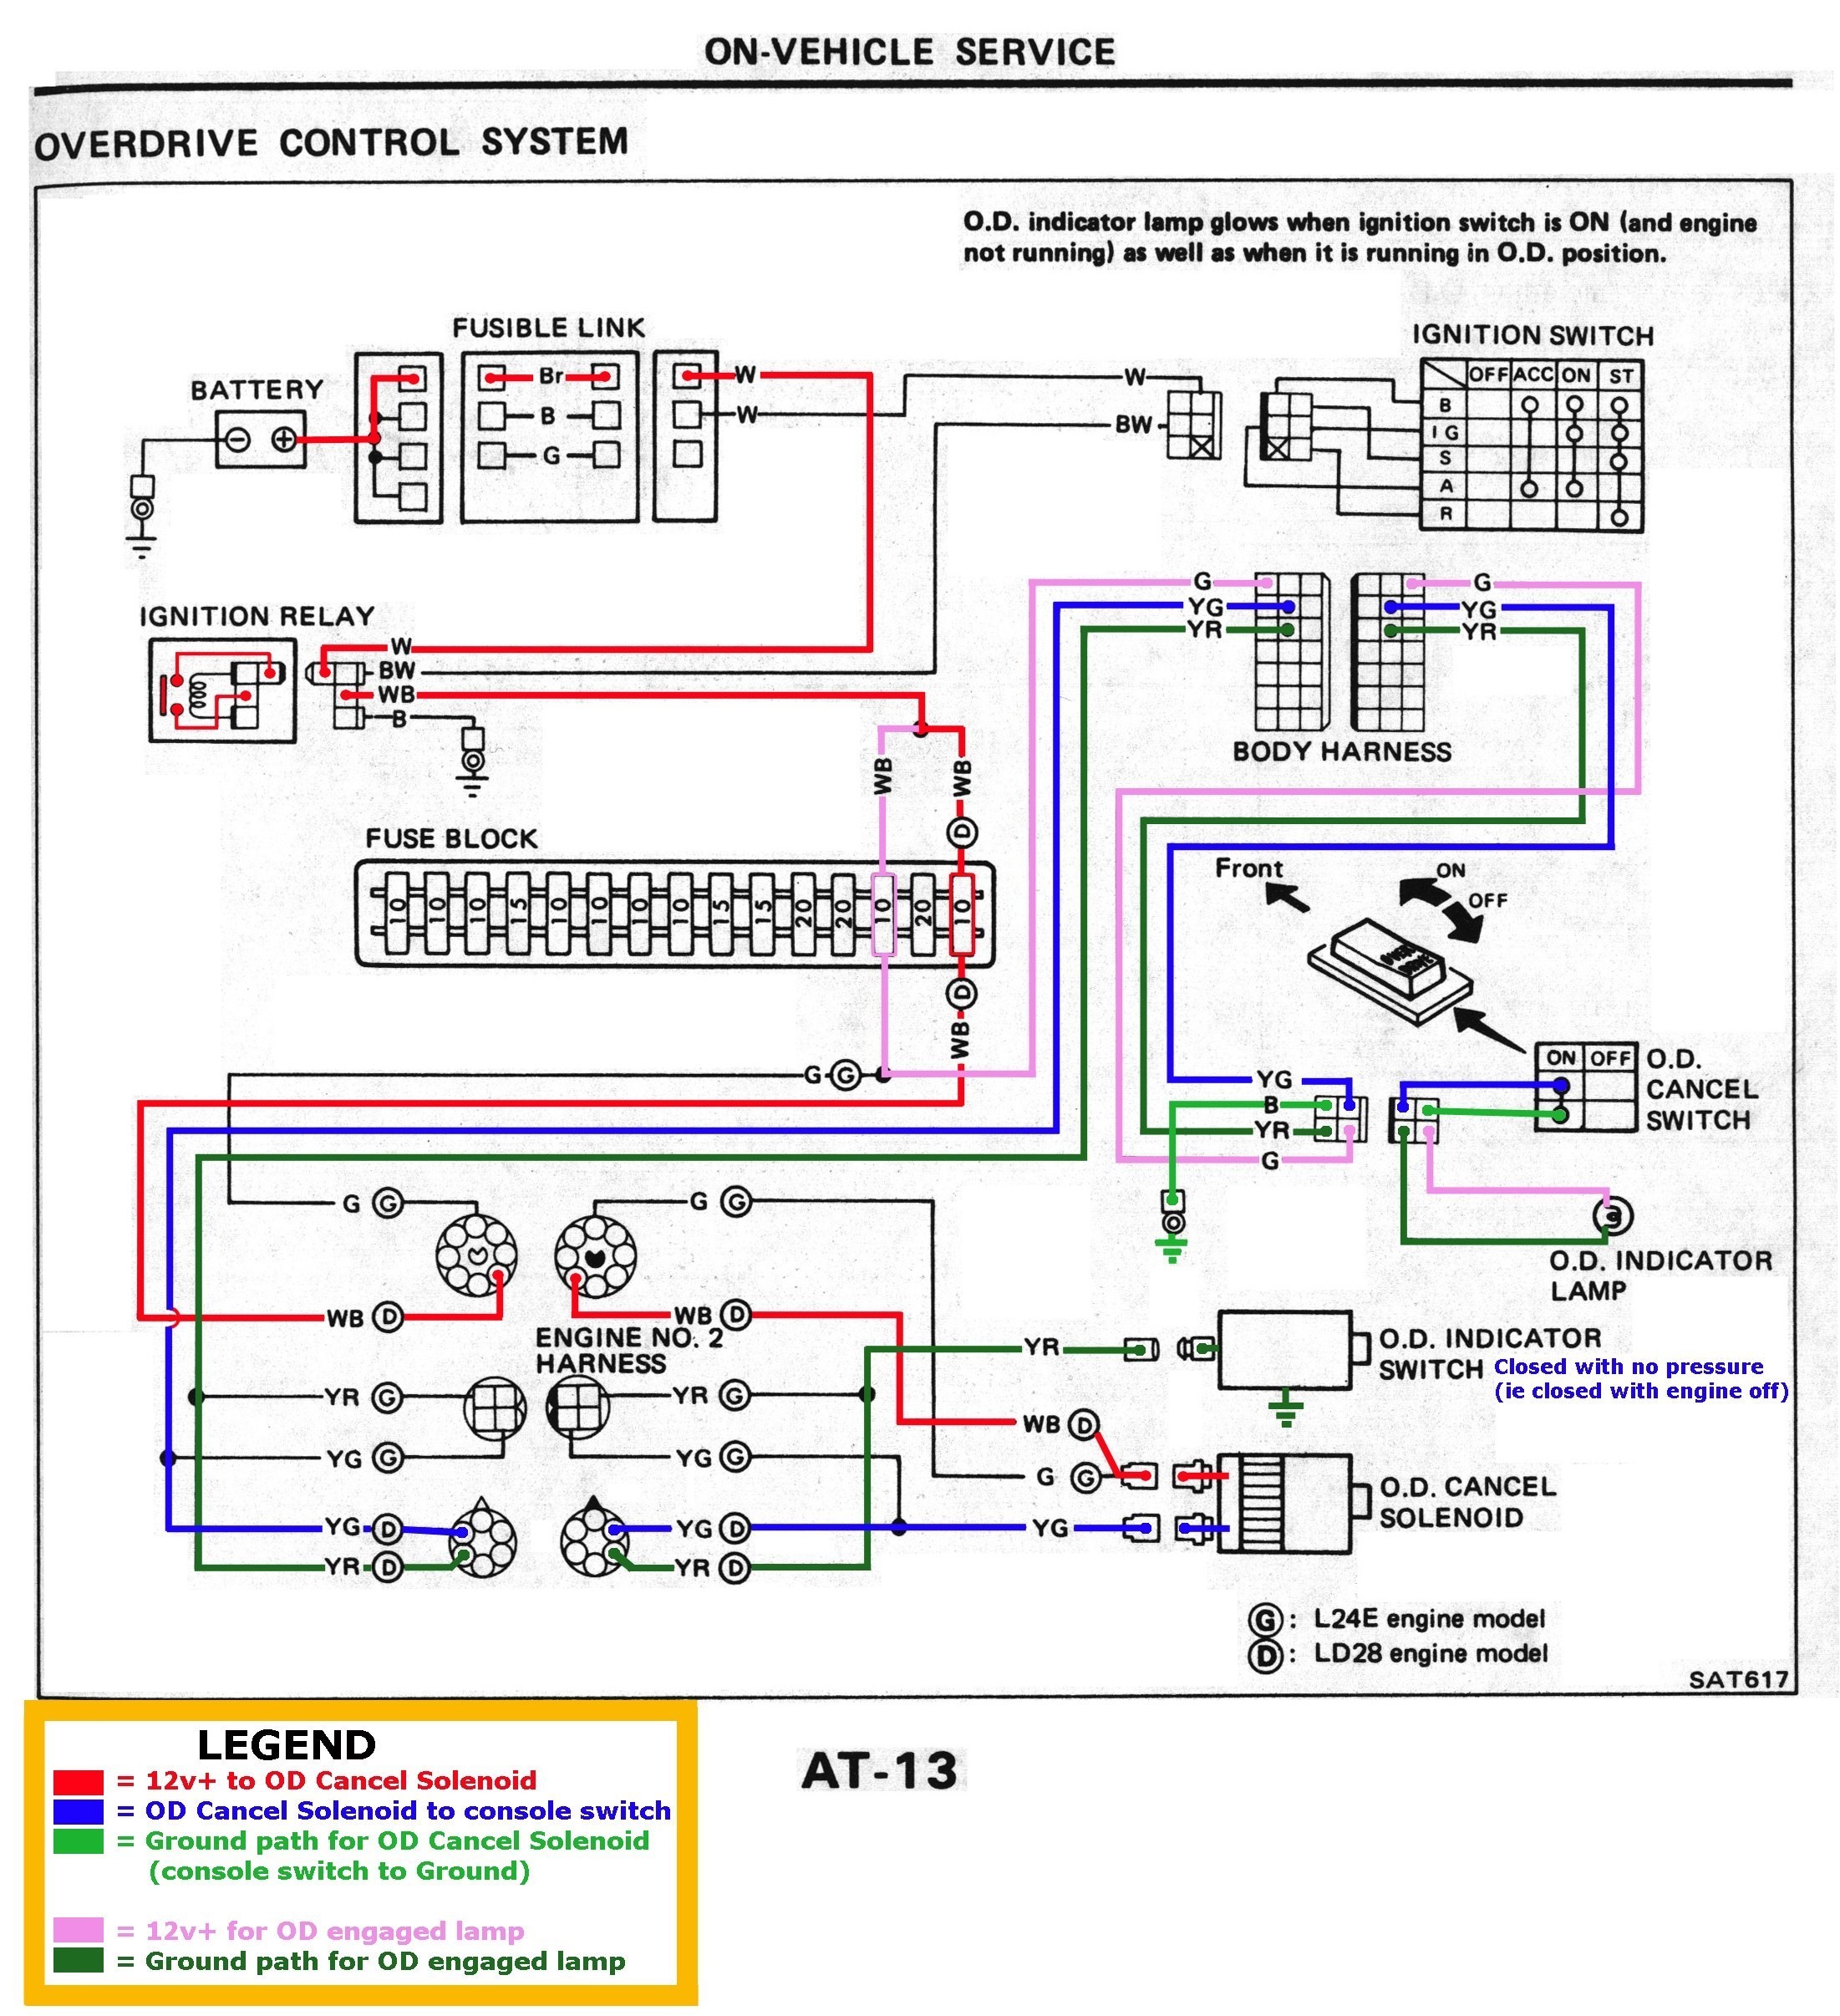 2005 Nissan Altima Bose Stereo Wiring Diagram from detoxicrecenze.com